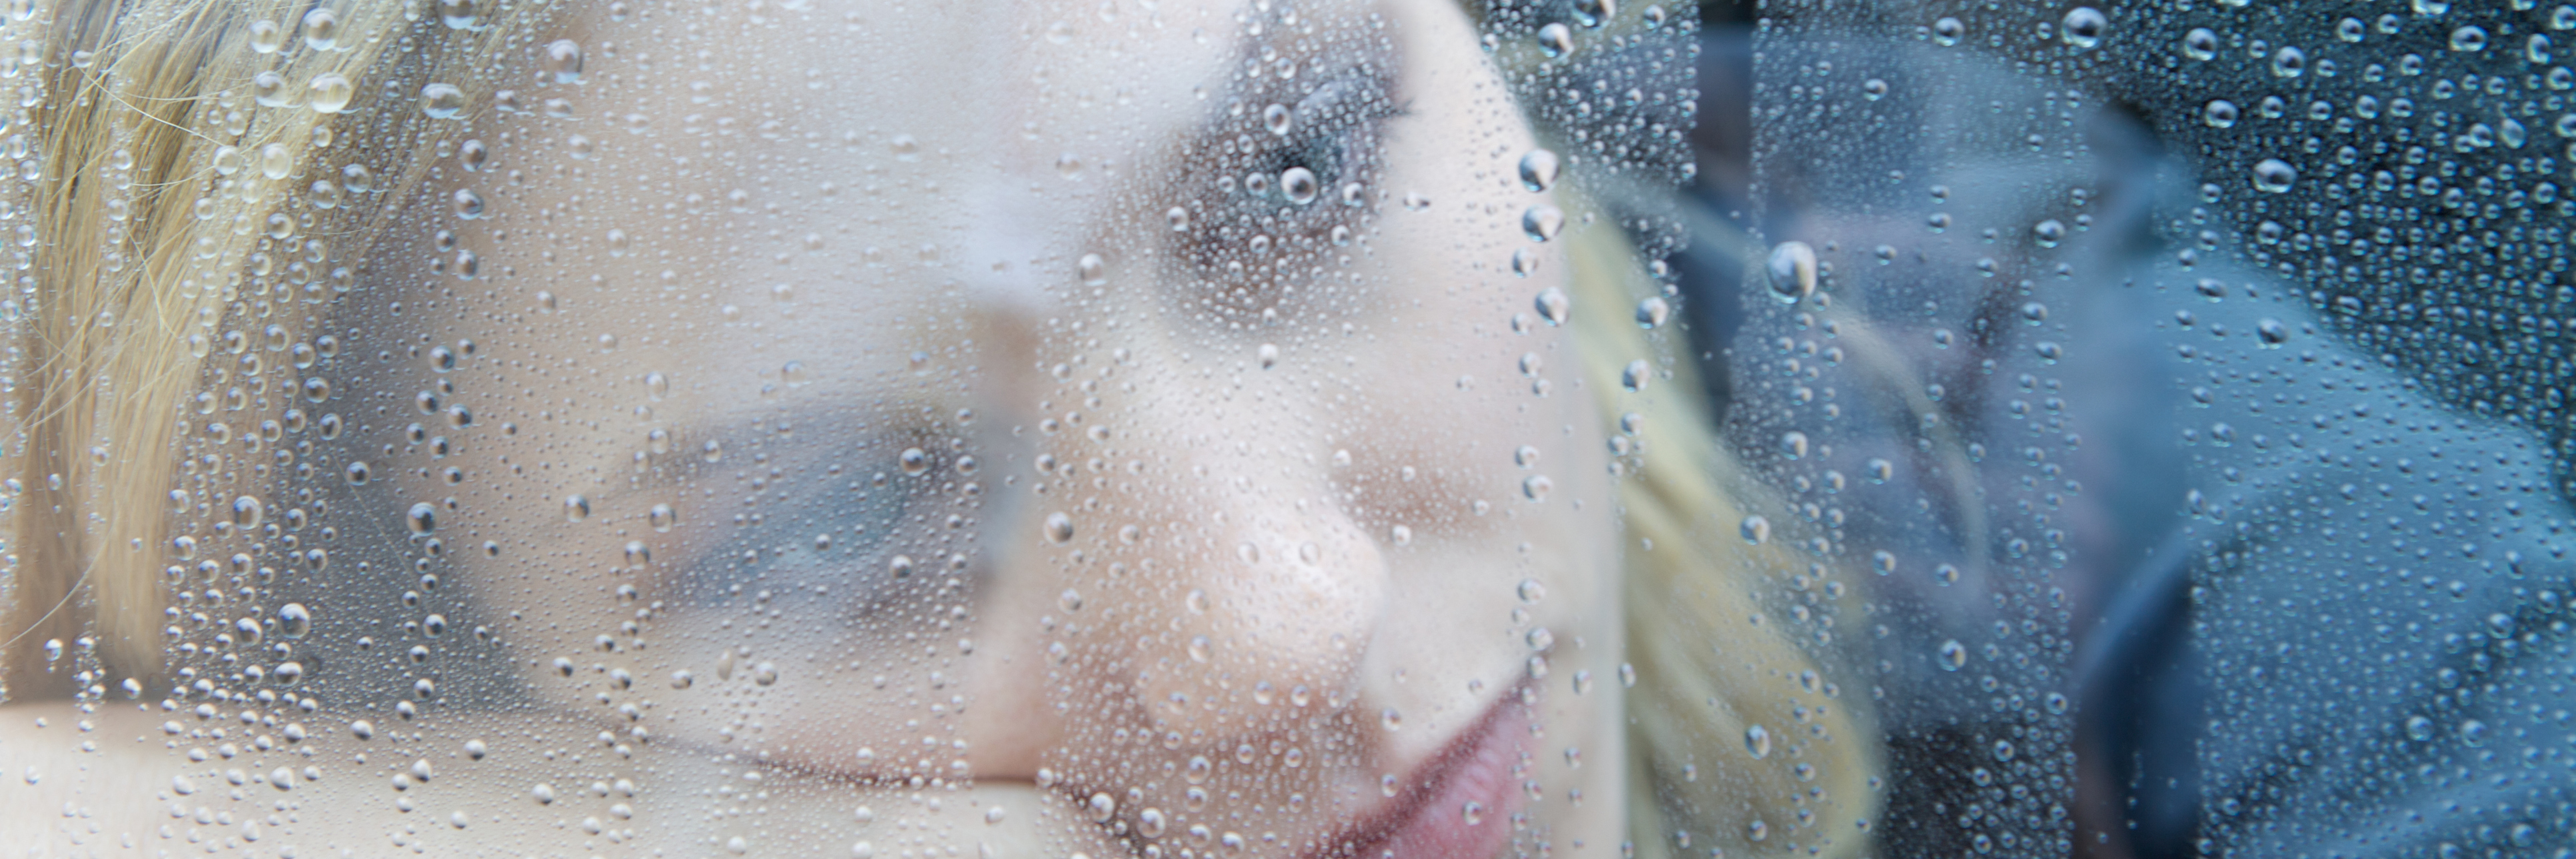 depressed woman resting head on arm near rainy window